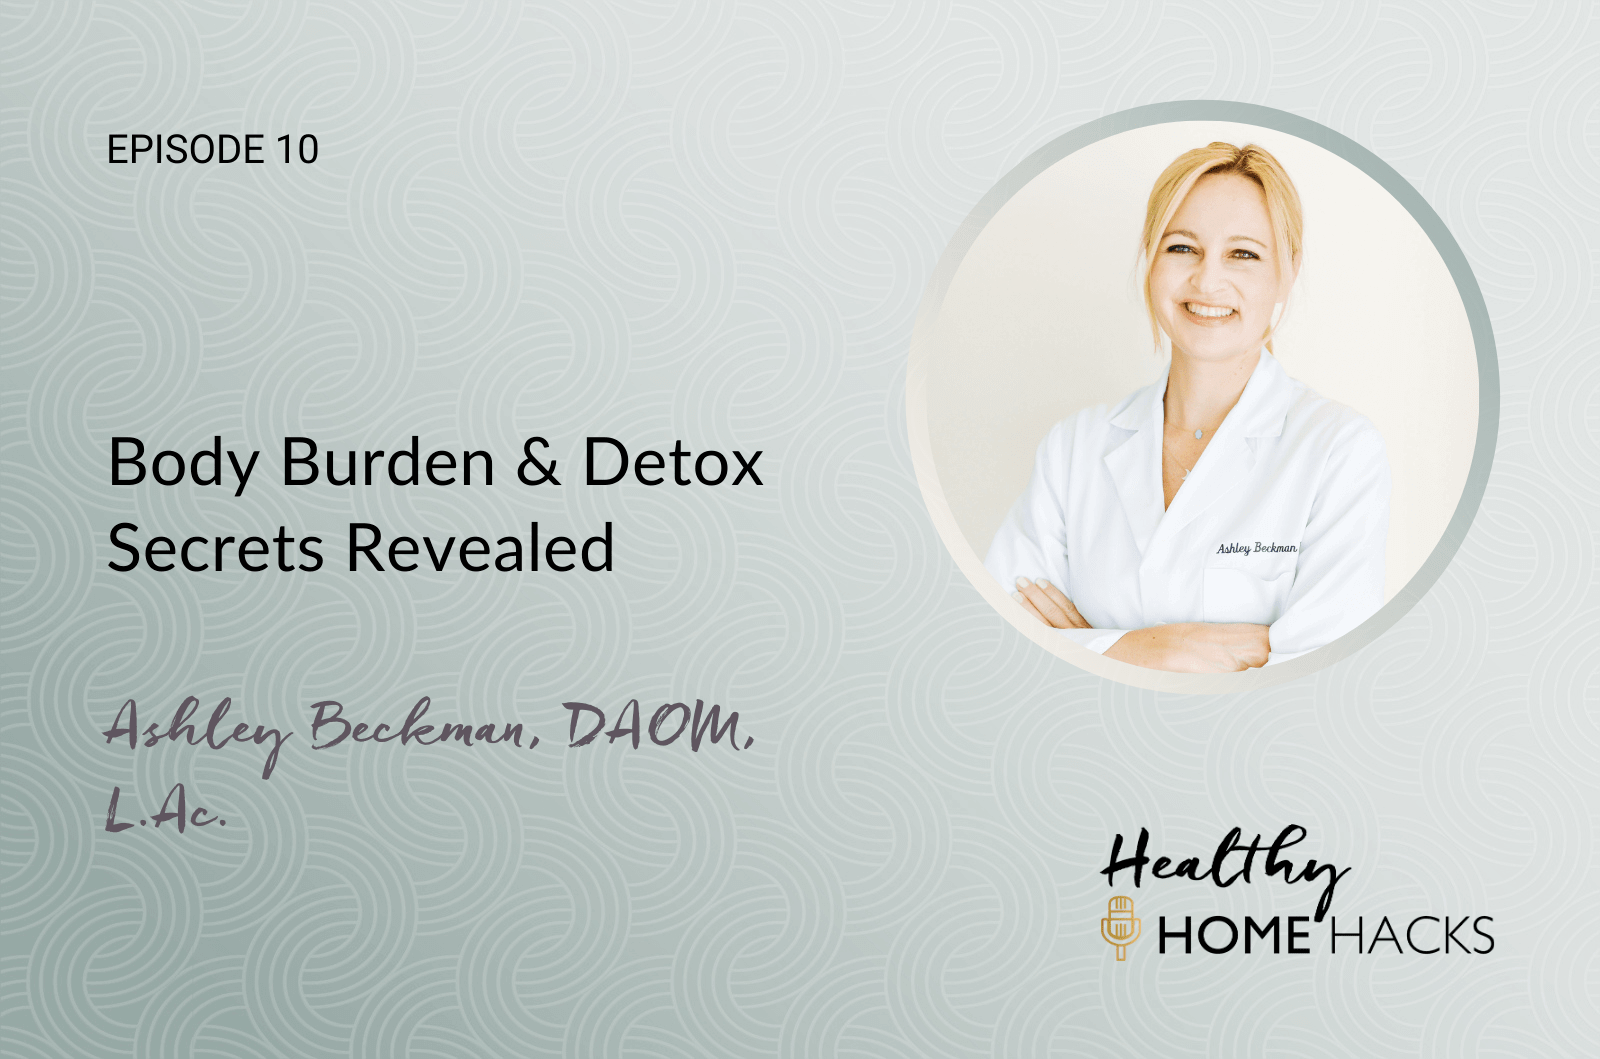 Body Burden & Detox Secrets Revealed